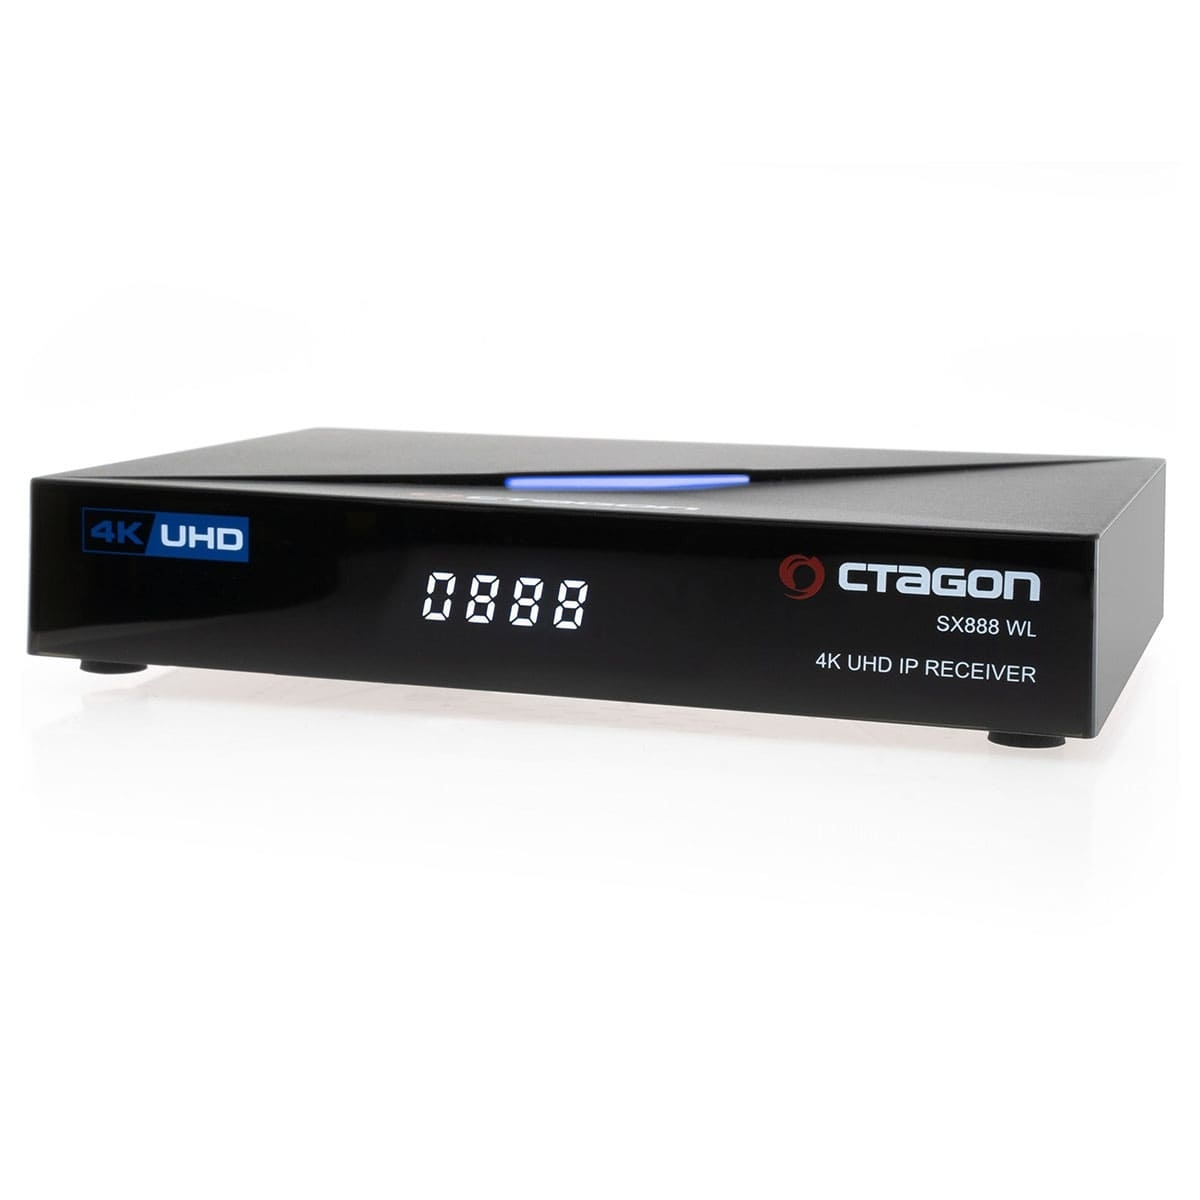 GB OCTAGON V2 4K SX888 4 WL